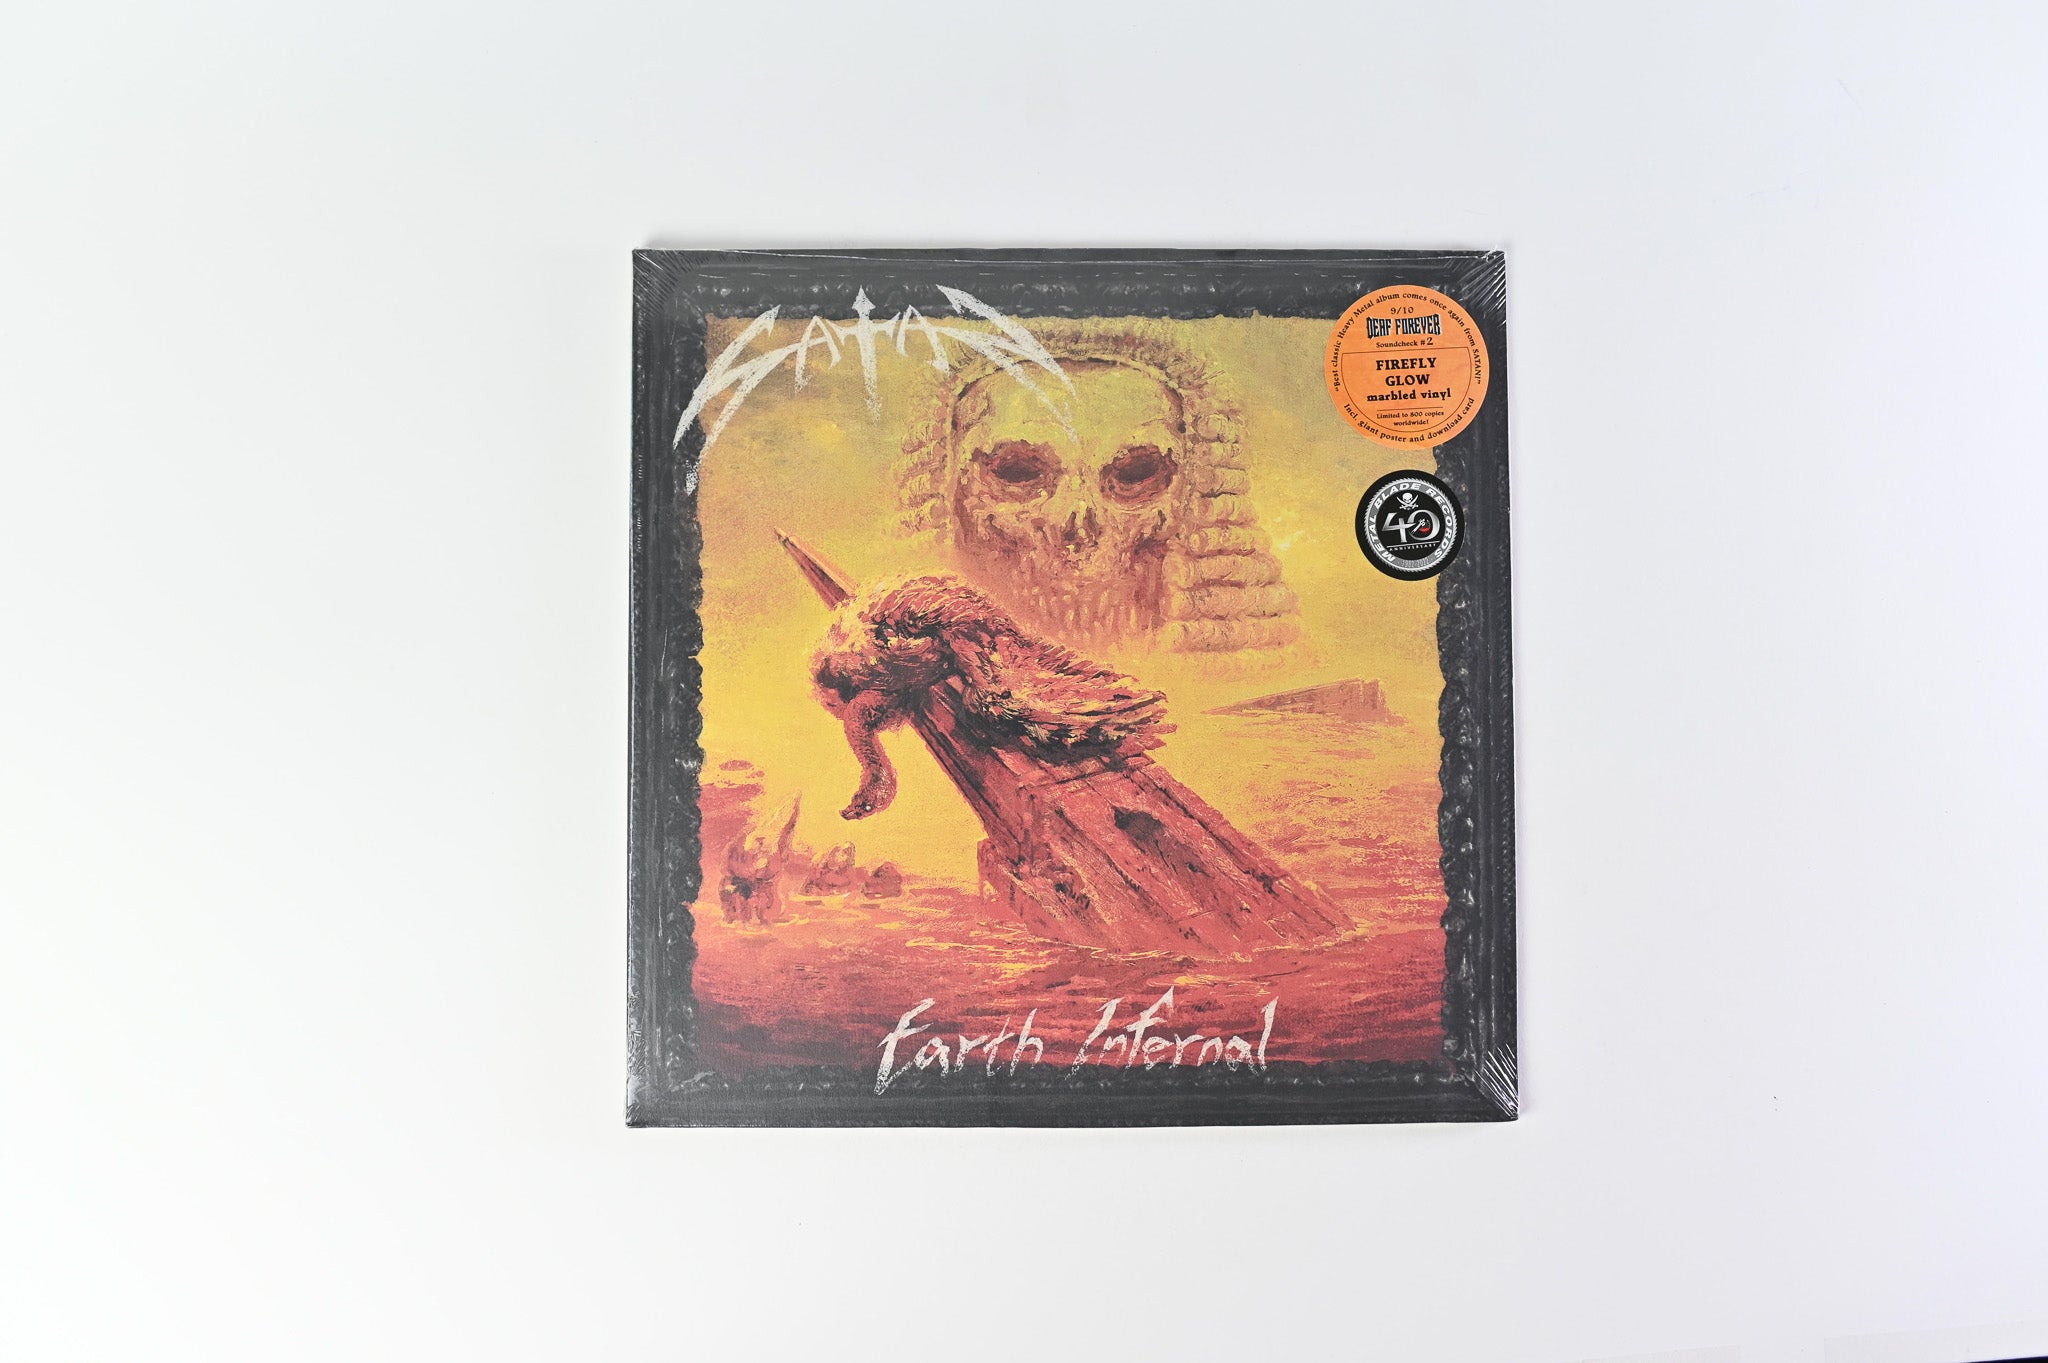 Satan - Earth Infernal on Metal Blade Limited Edition Firefly Glow Vinyl Sealed